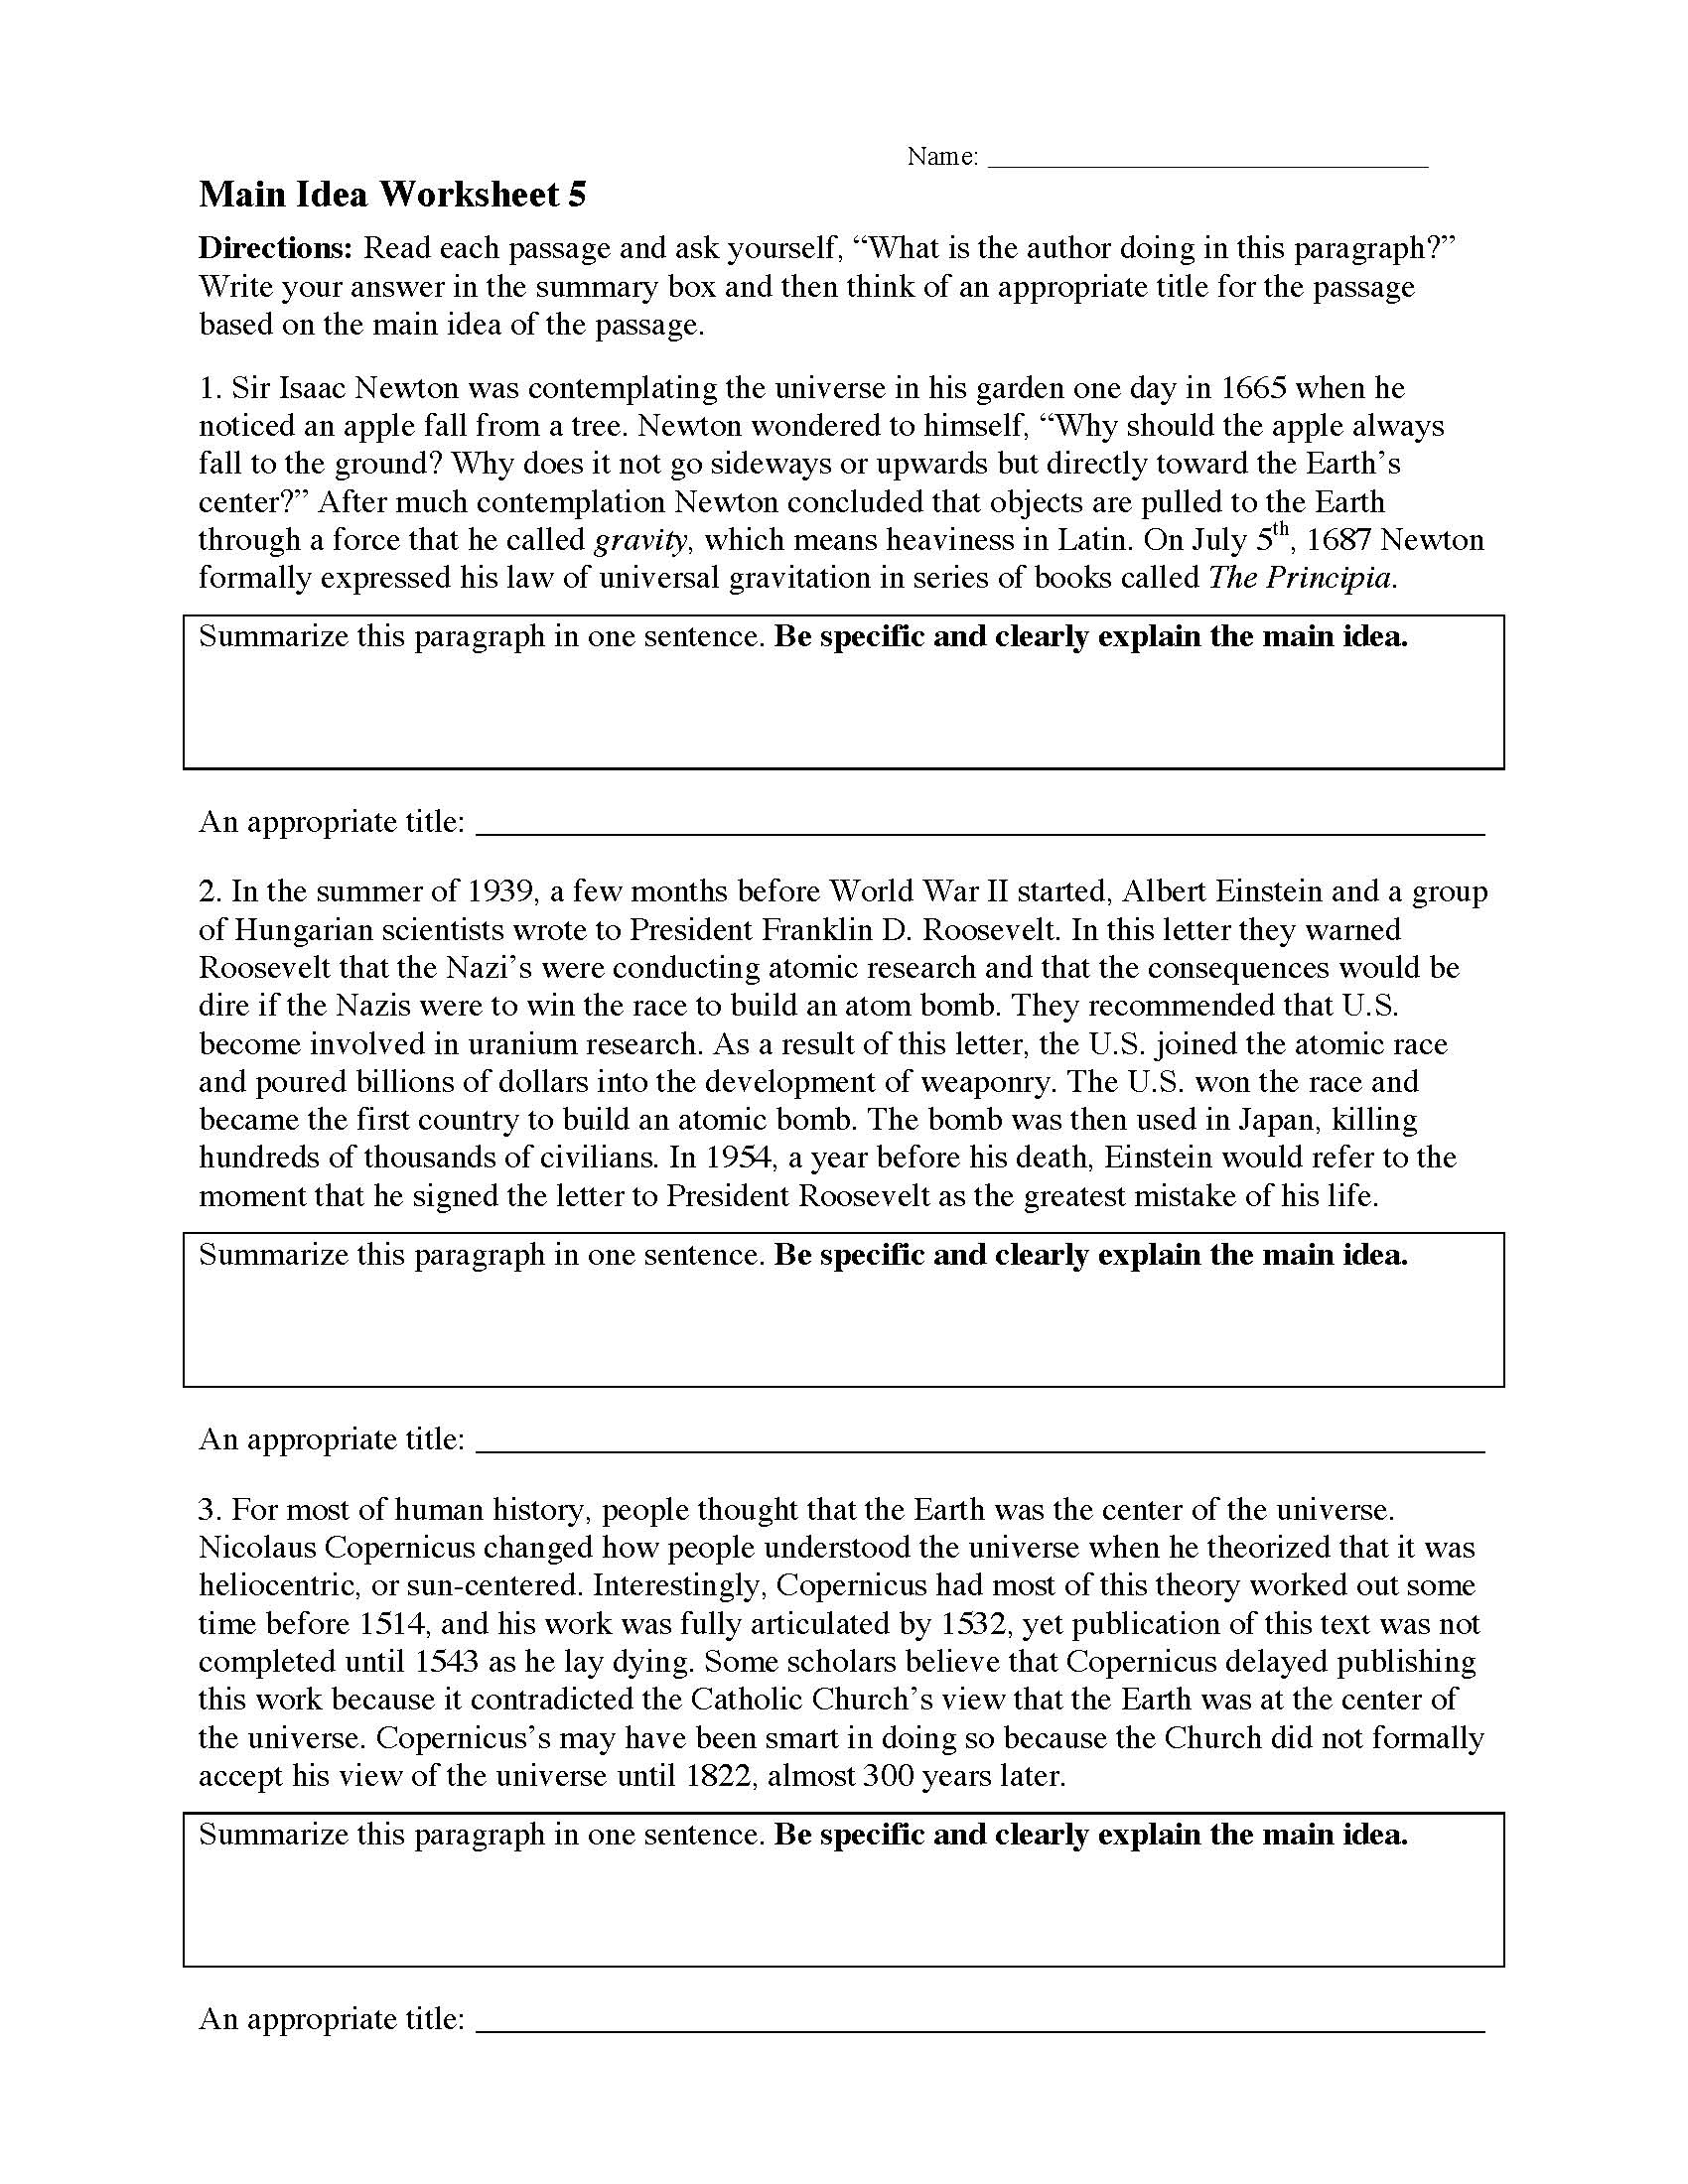 Main Idea Worksheets  Ereading Worksheets With Regard To Main Idea Worksheet 4th Grade